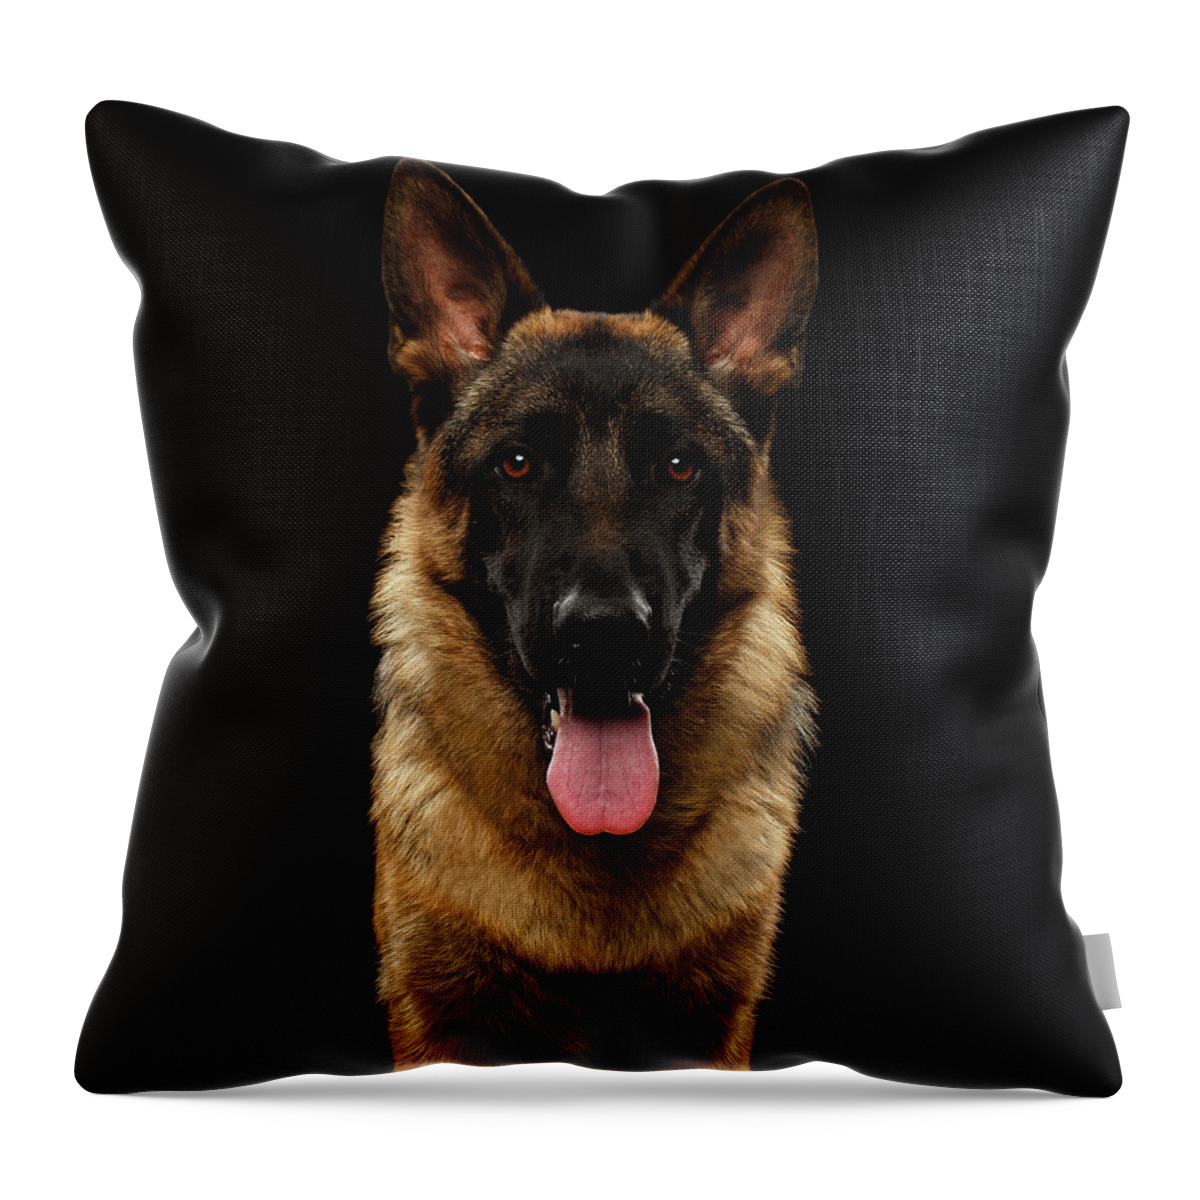 Dog Throw Pillow featuring the photograph Closeup Portrait of German Shepherd on Black by Sergey Taran